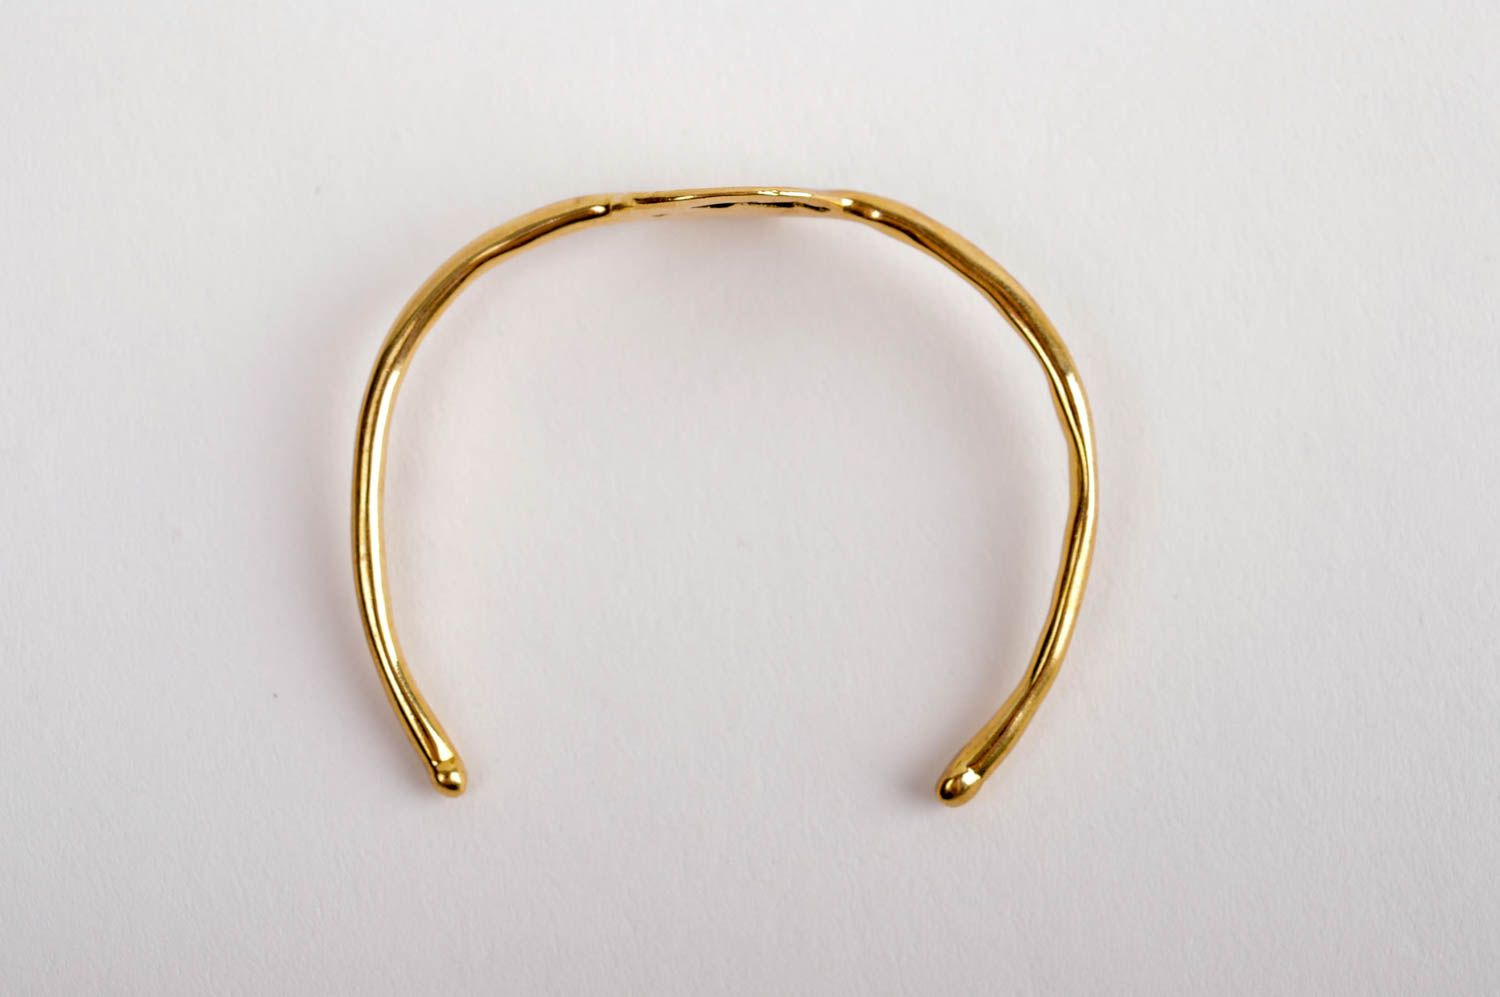 Handmade jewelry metal bracelet designer jewelry bracelet for women gift for her photo 4